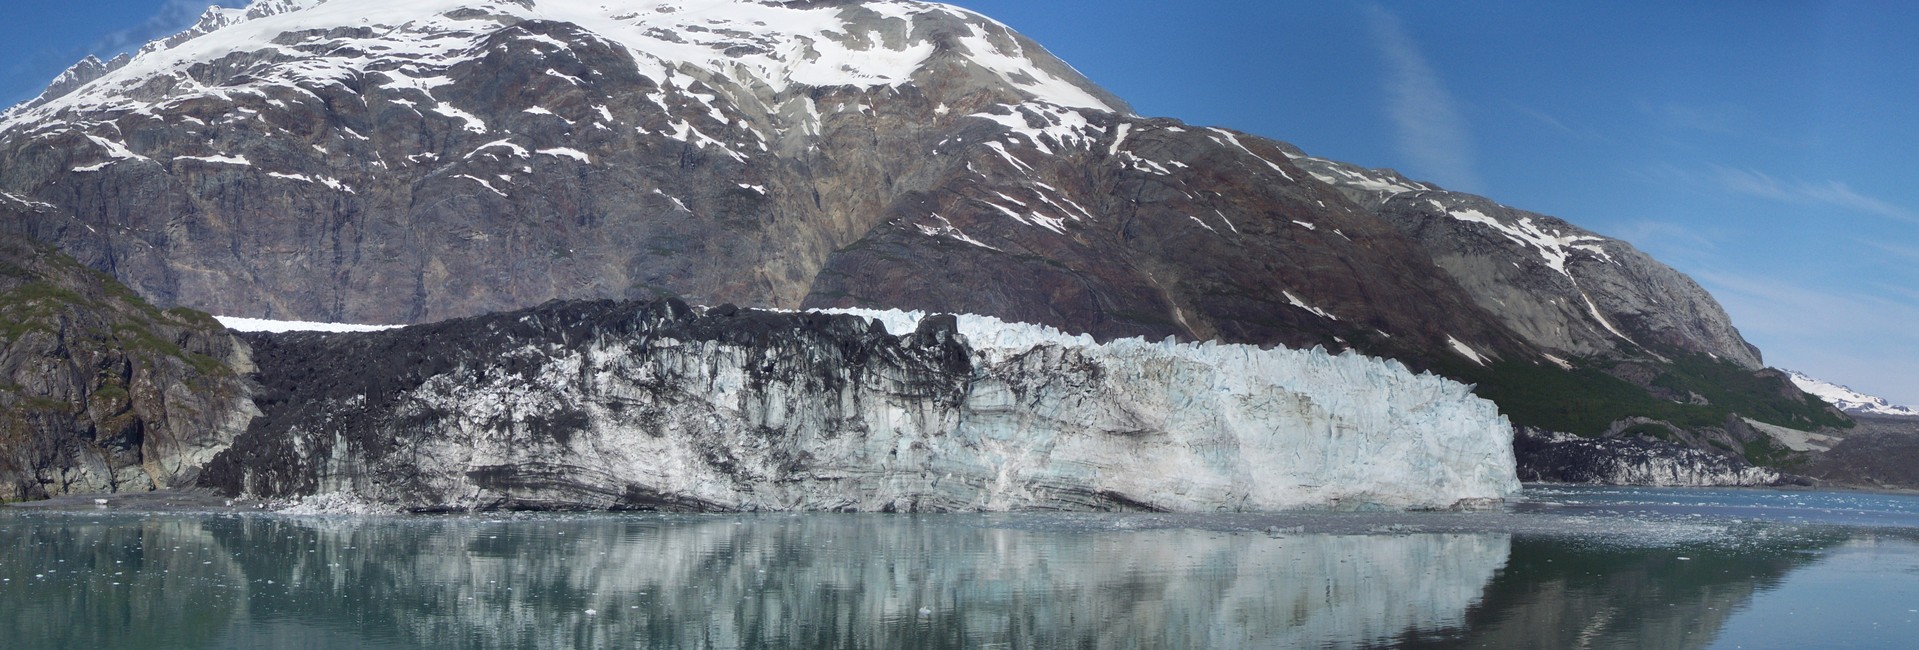 pano9_crop1_margerie_glacier_panoramic_180.jpg